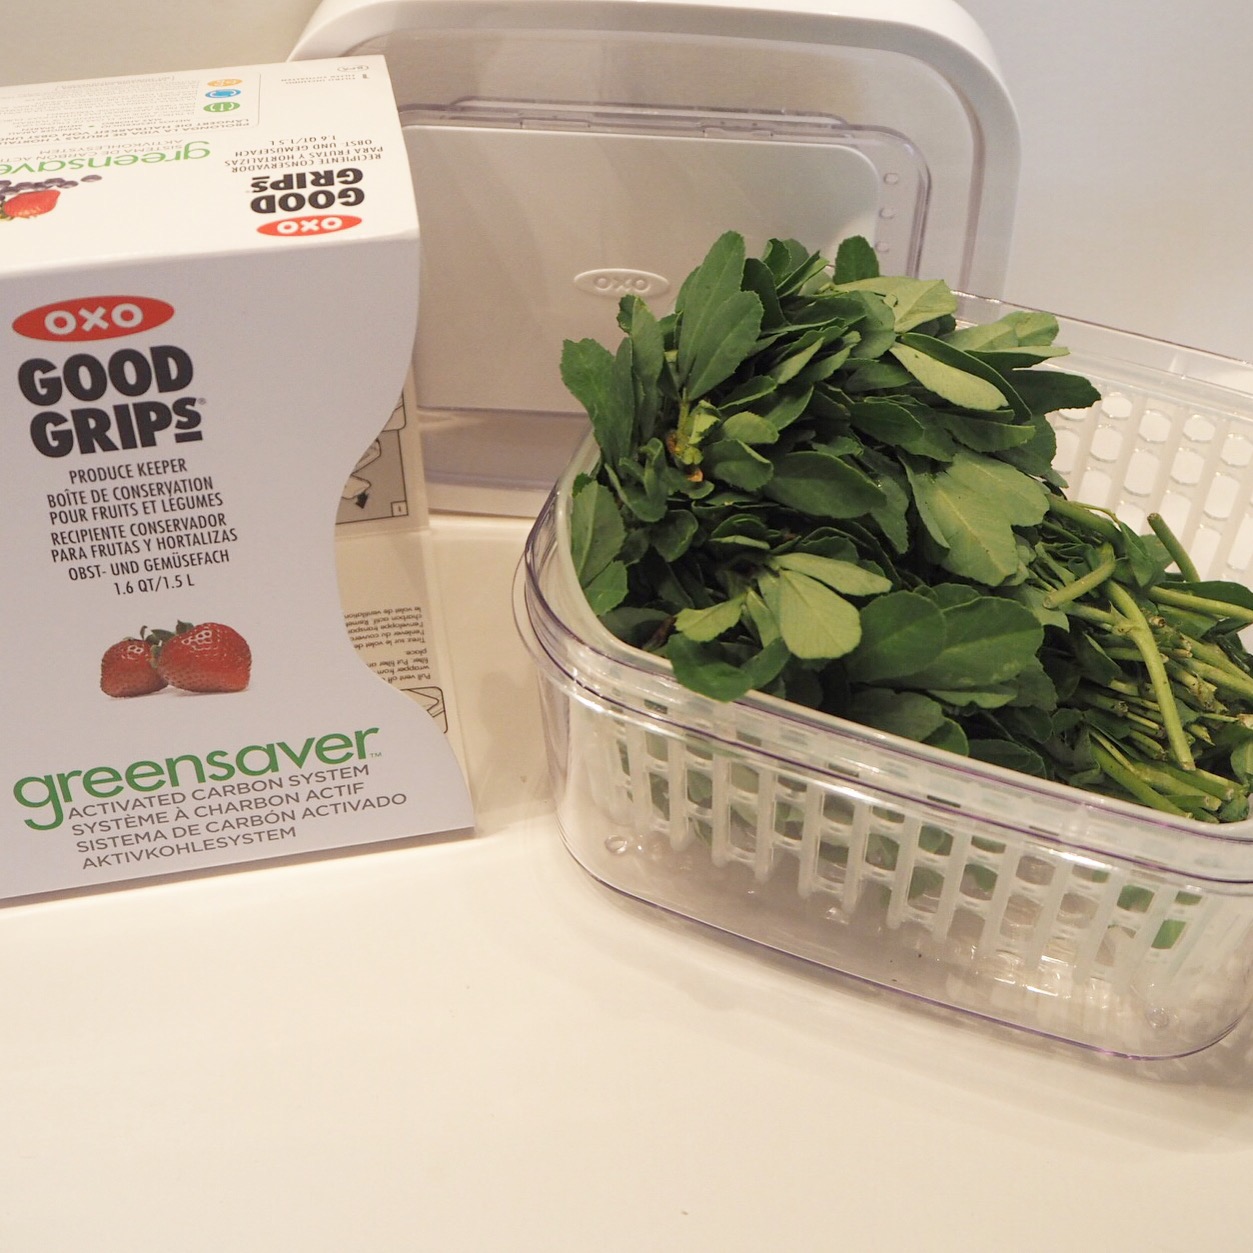 OXO Good Grips Greensaver Herb Keeper